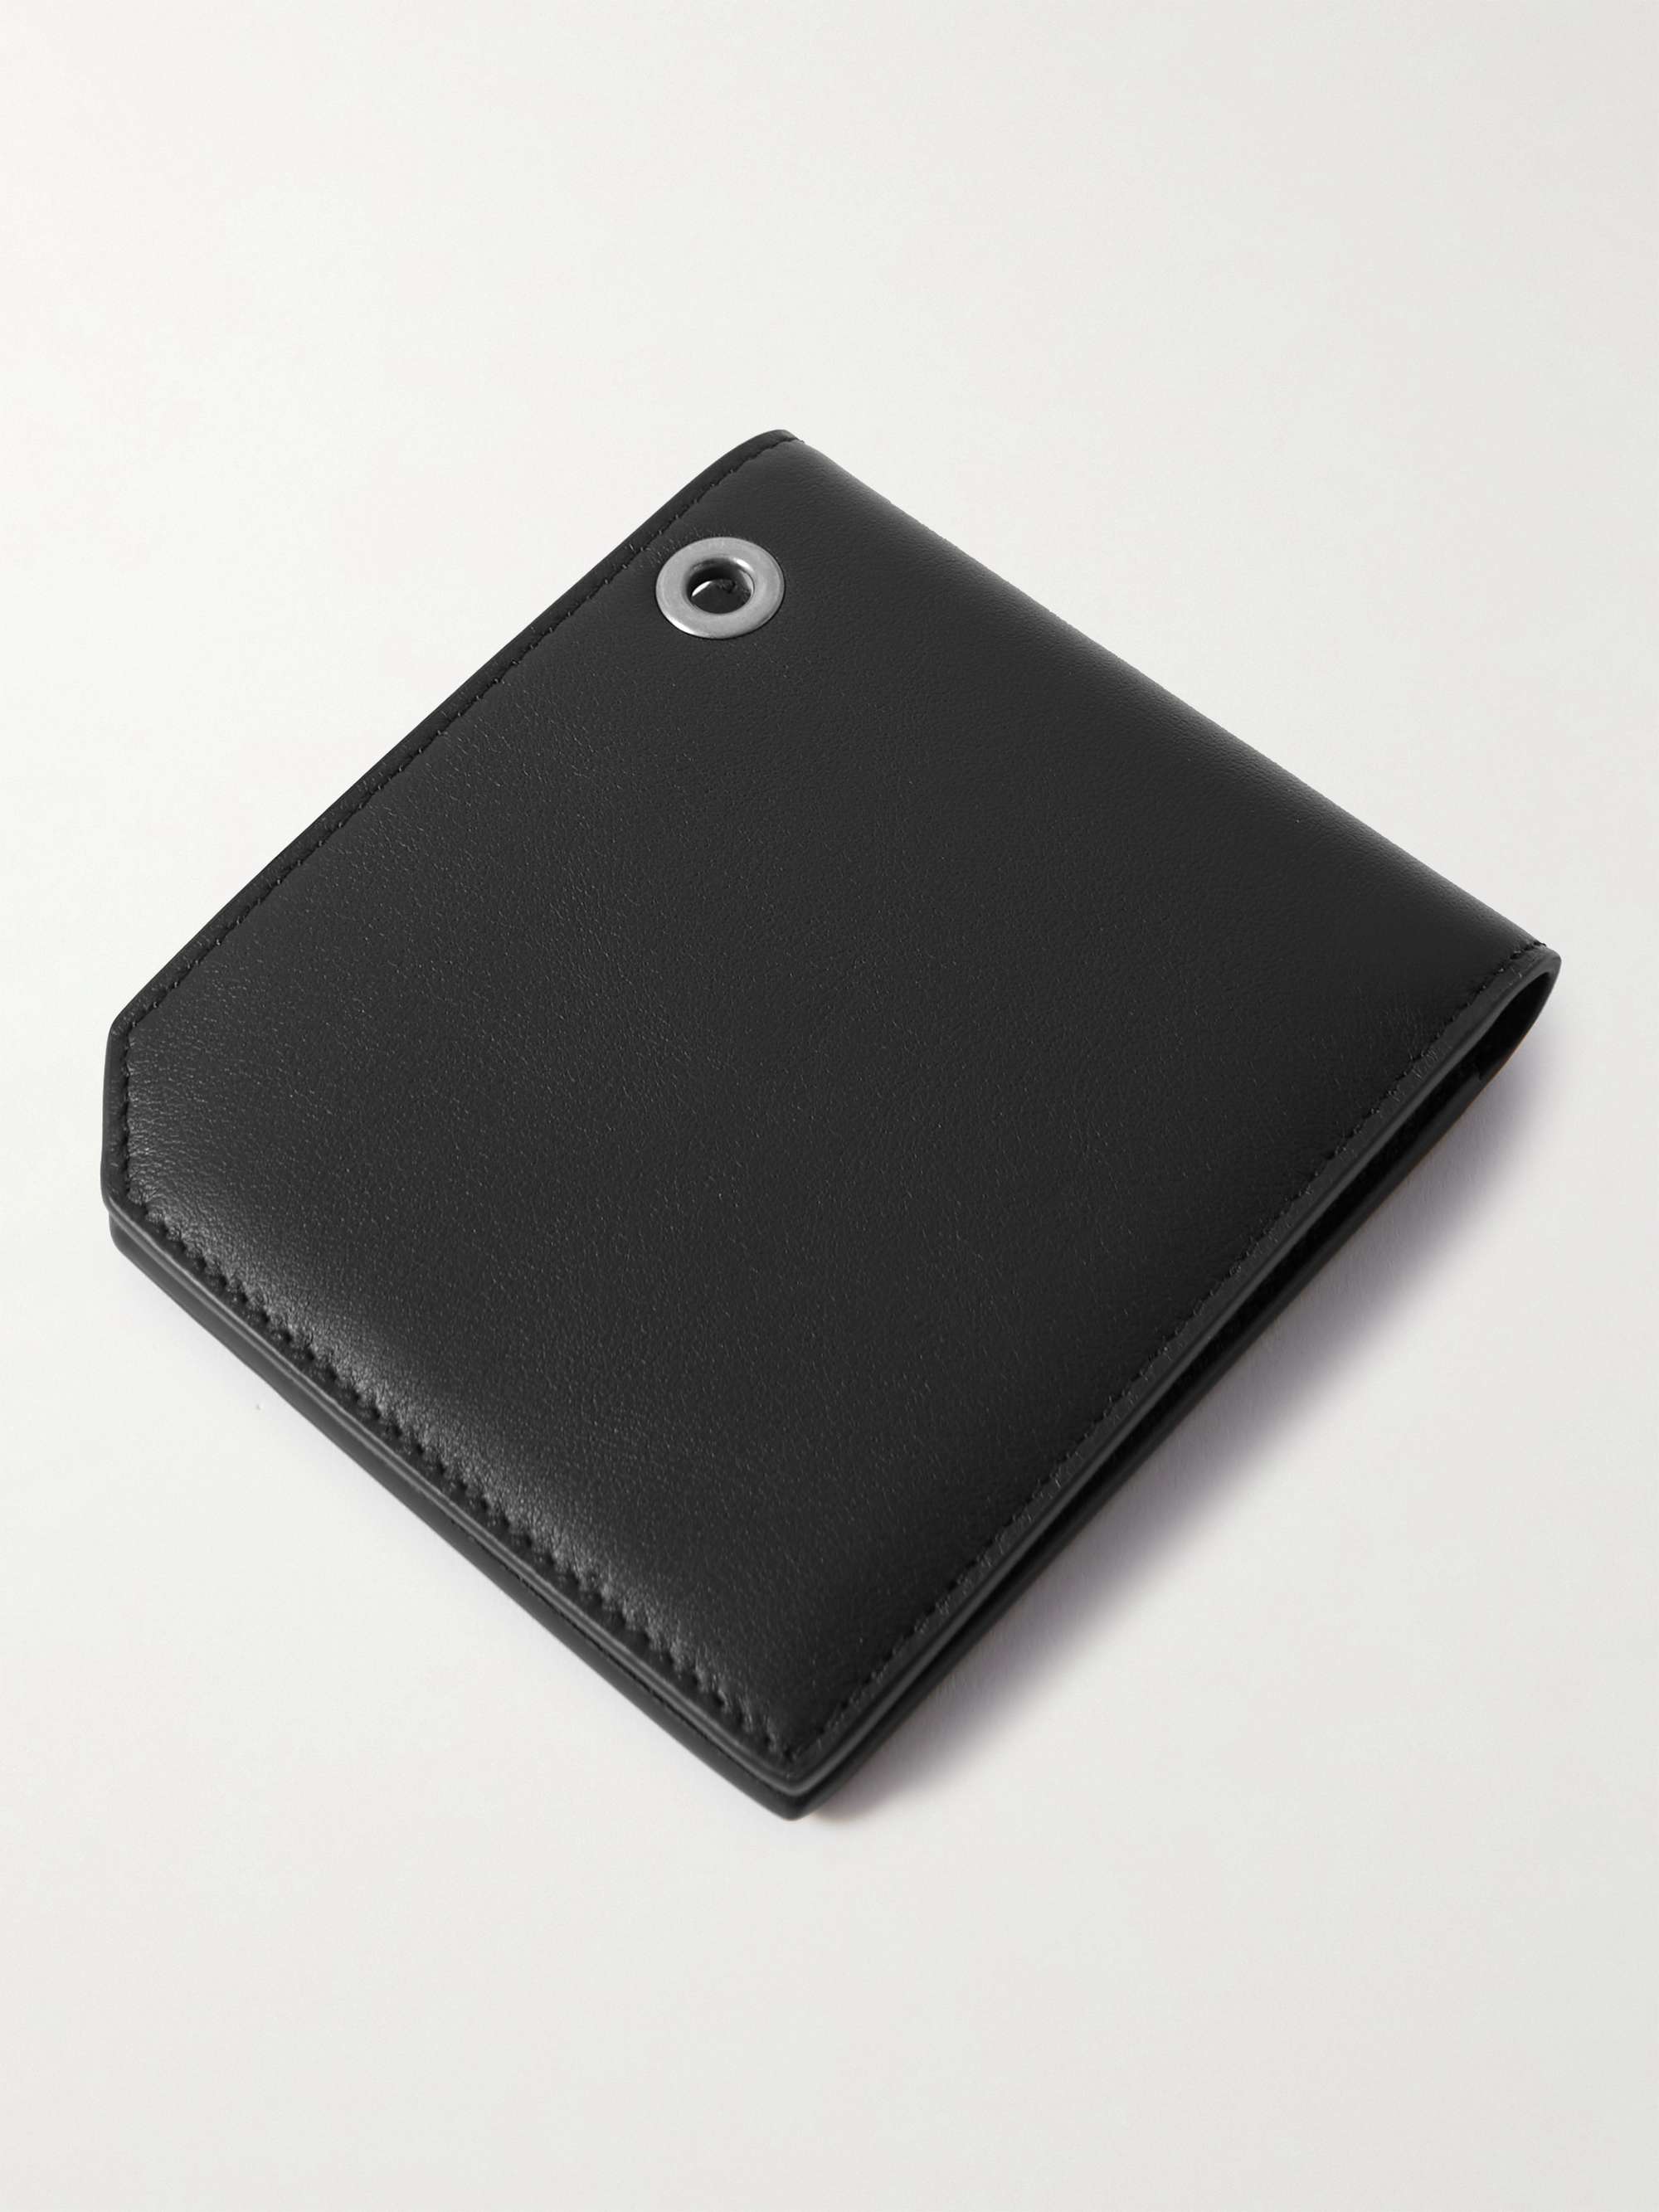 MONTBLANC Meisterstück Leather Billfold Wallet with Lanyard